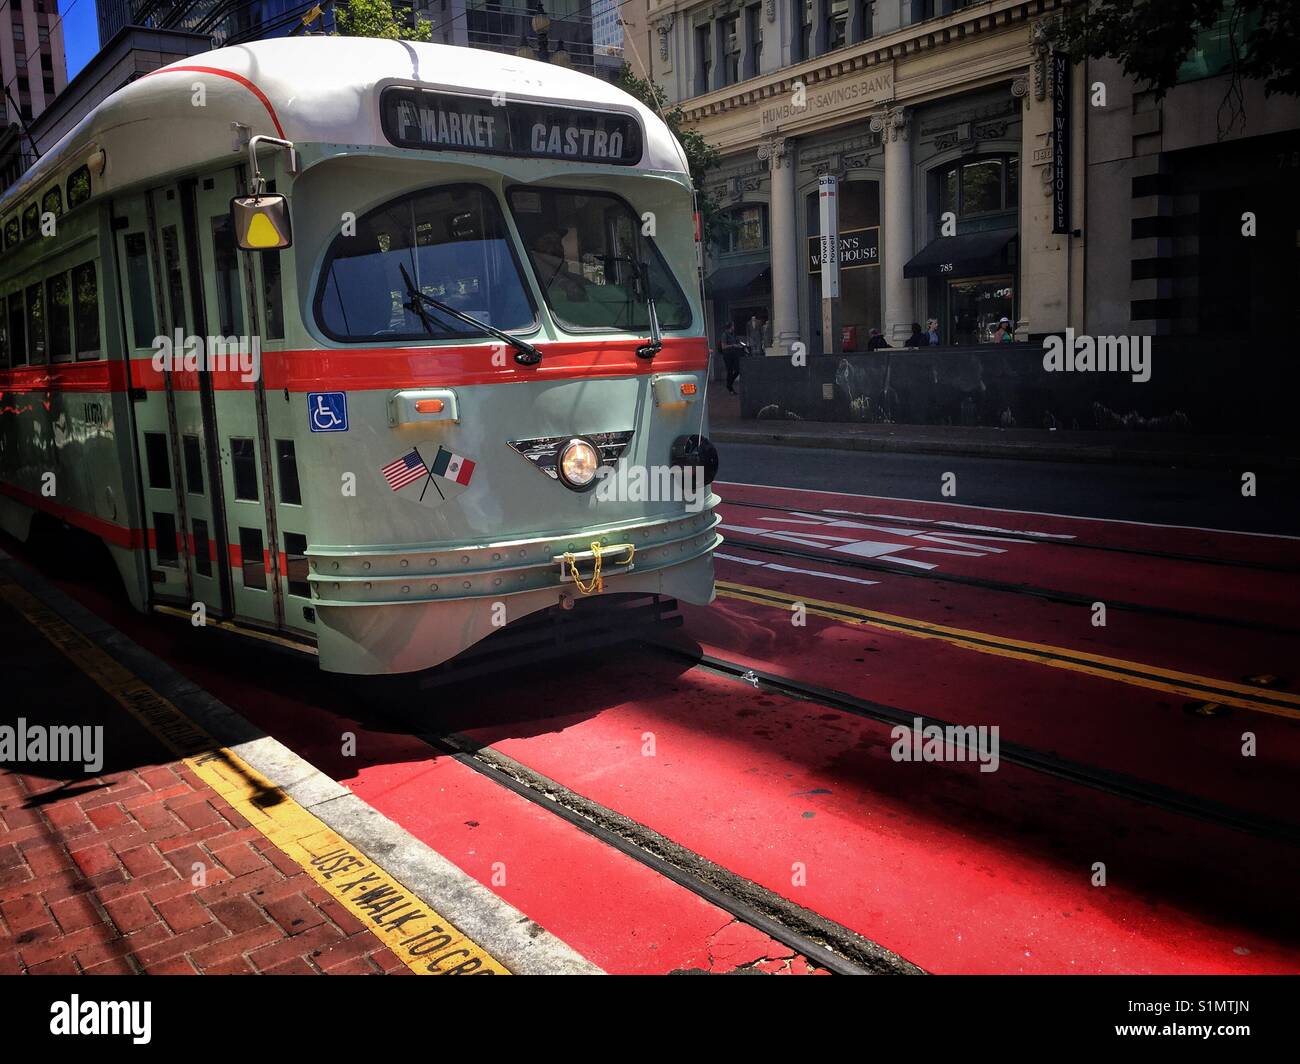 Iconic streetscape of classic F-market to Castro streetcar in San Francisco, California, United States Stock Photo